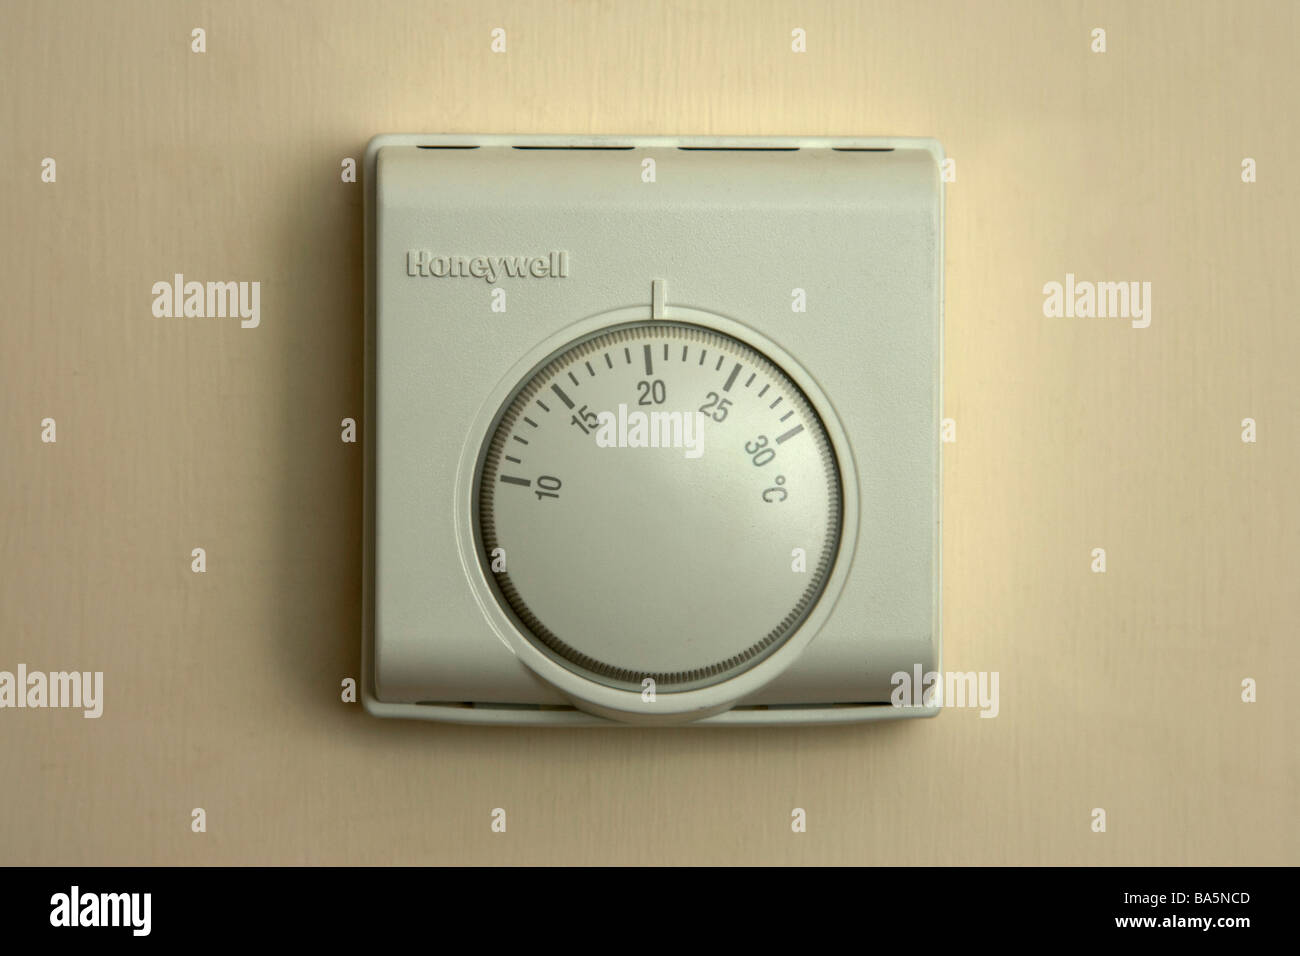 Honeywell riscaldamento termostato Foto Stock